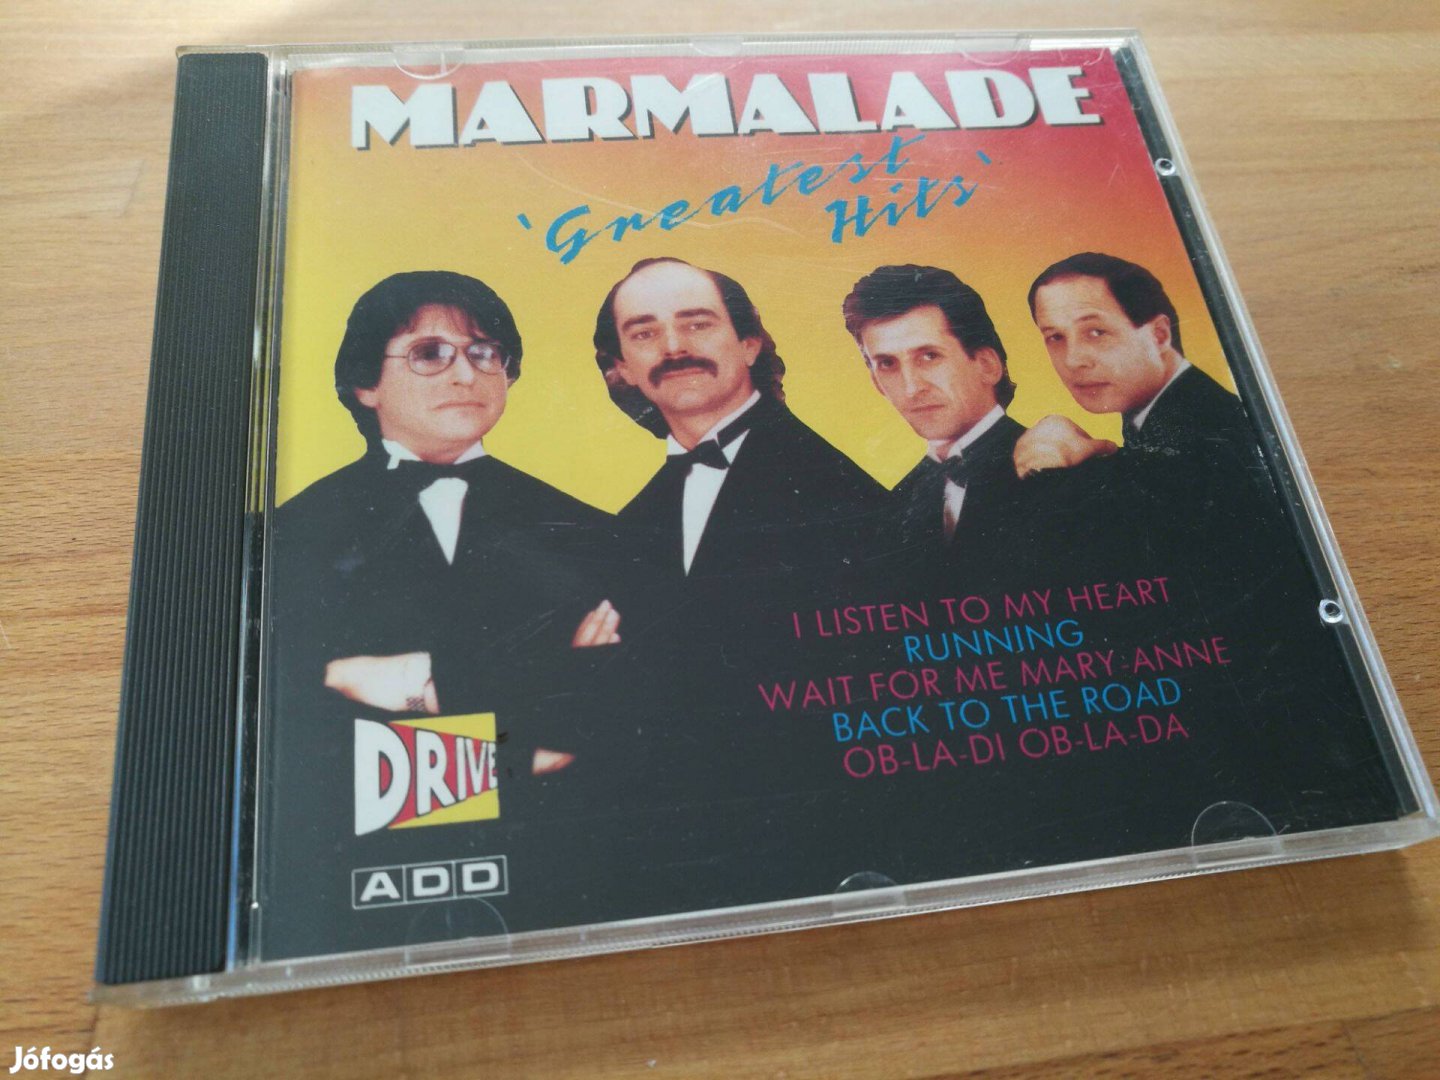 The Marmalade - Greatest Hits (Baur Music, CH, 1989, CD)